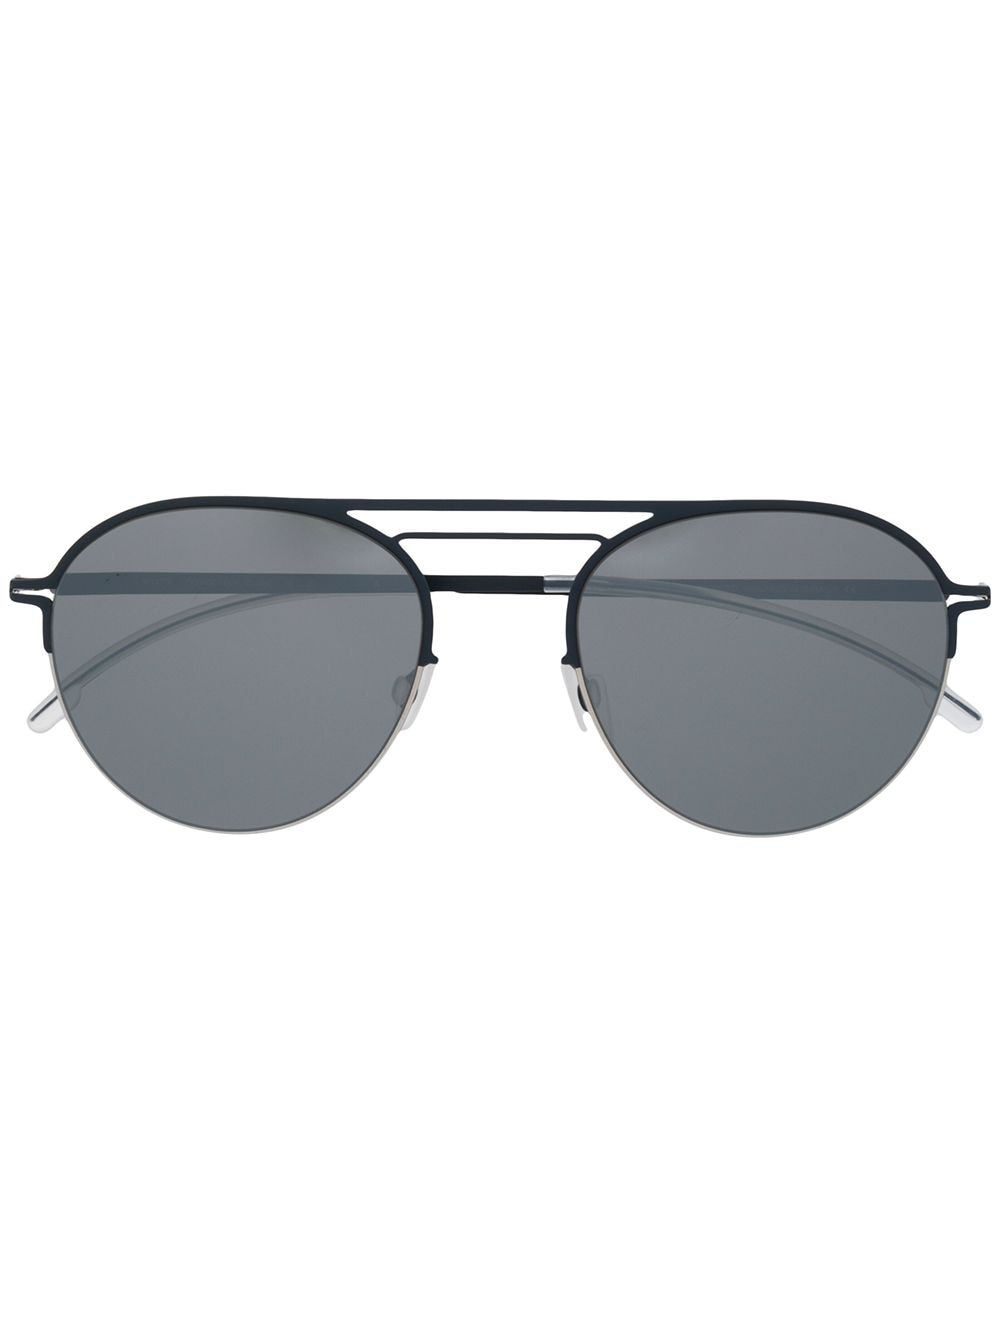 Mykita Panto Shaped Frame Black Sunglasses - Atterley In Blue